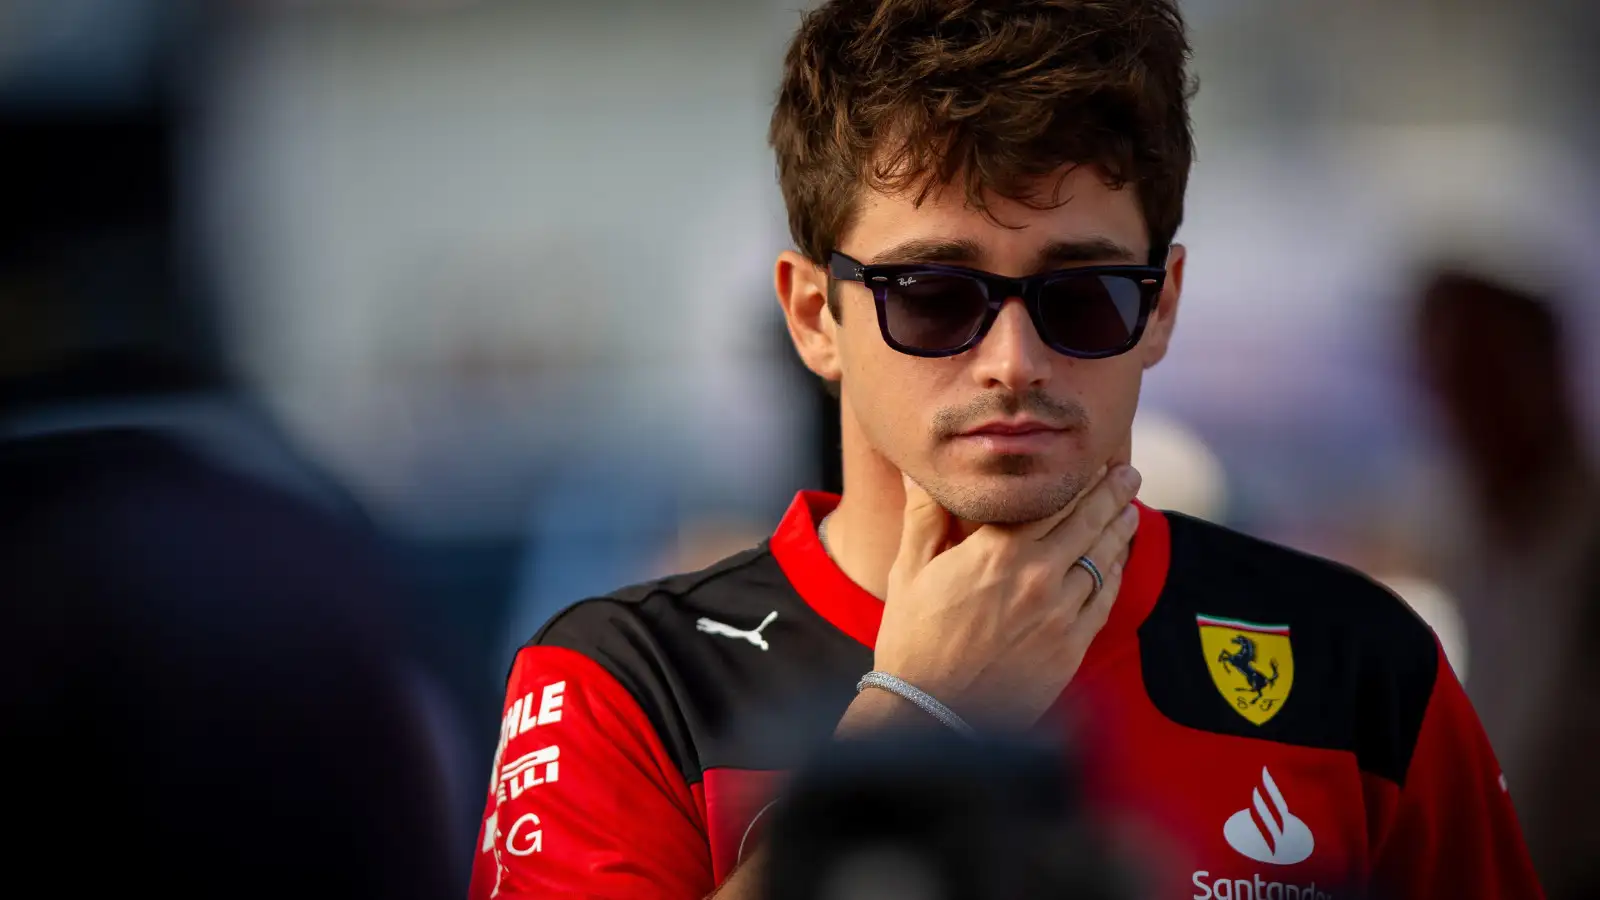 Ferrari F1 driver Charles Leclerc looking pensive in the paddock.